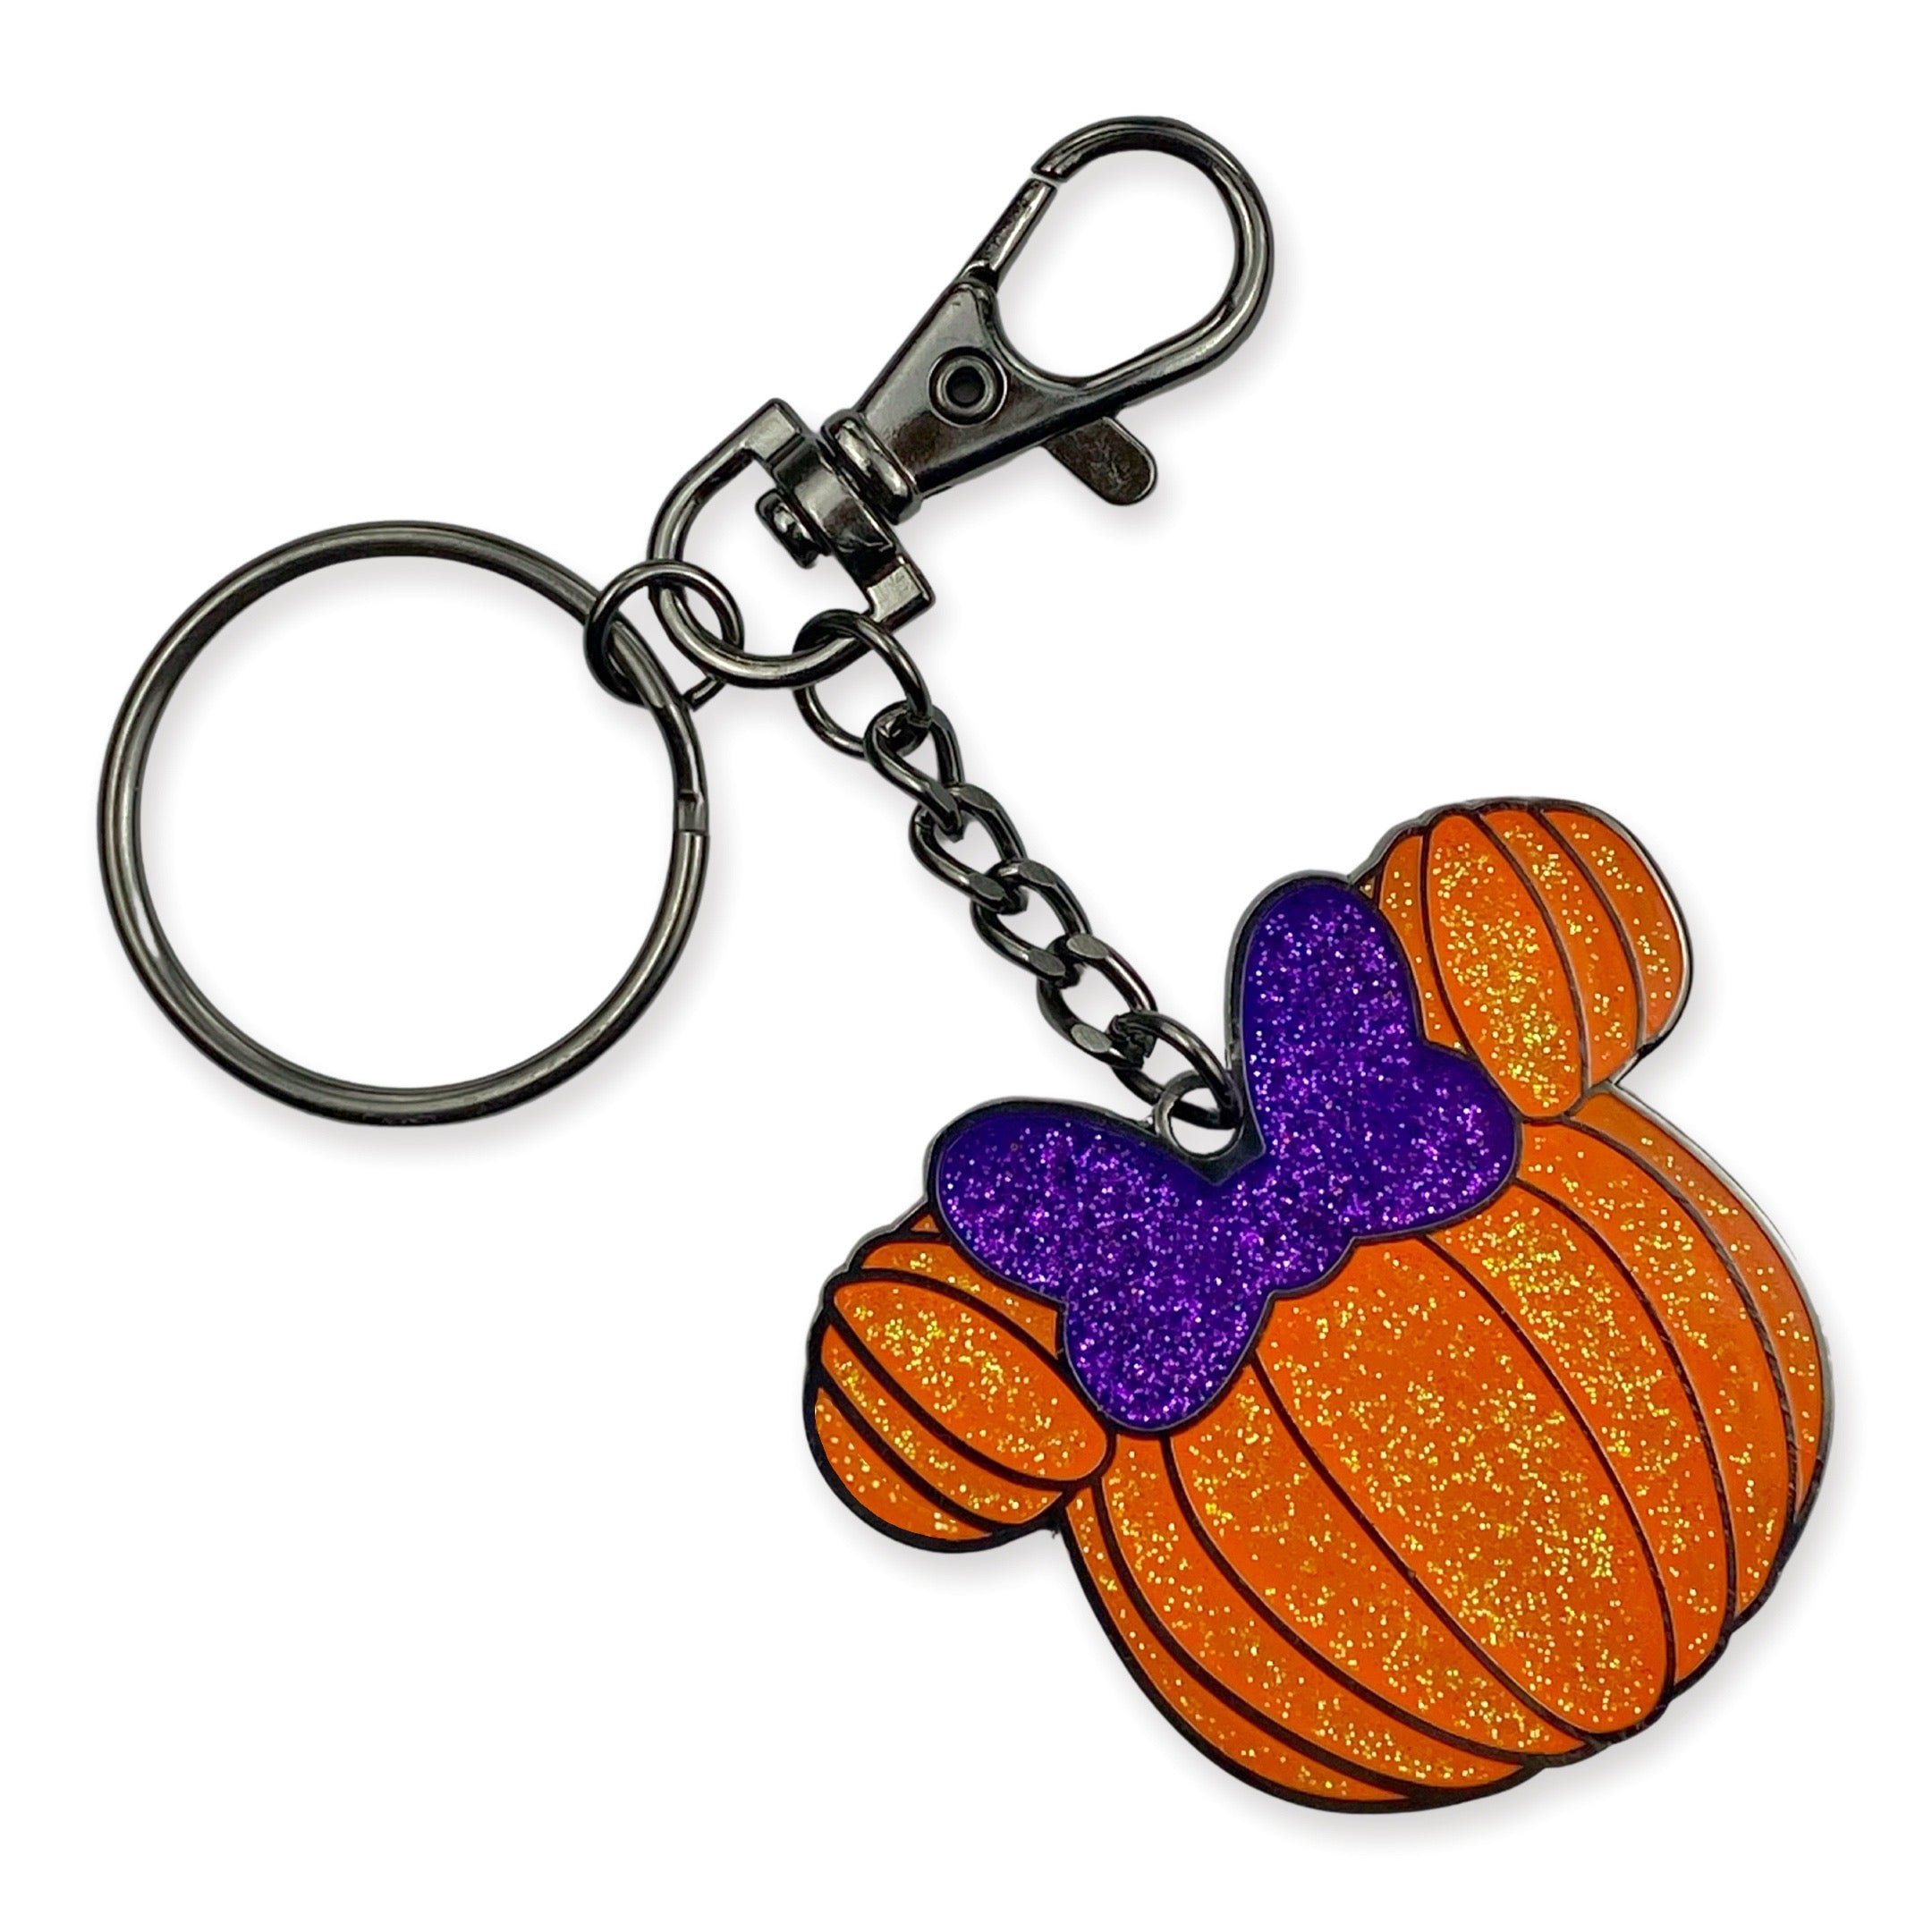 Keychain / Bag Charm - Pumpkin Mouse DOUBLE SIDED